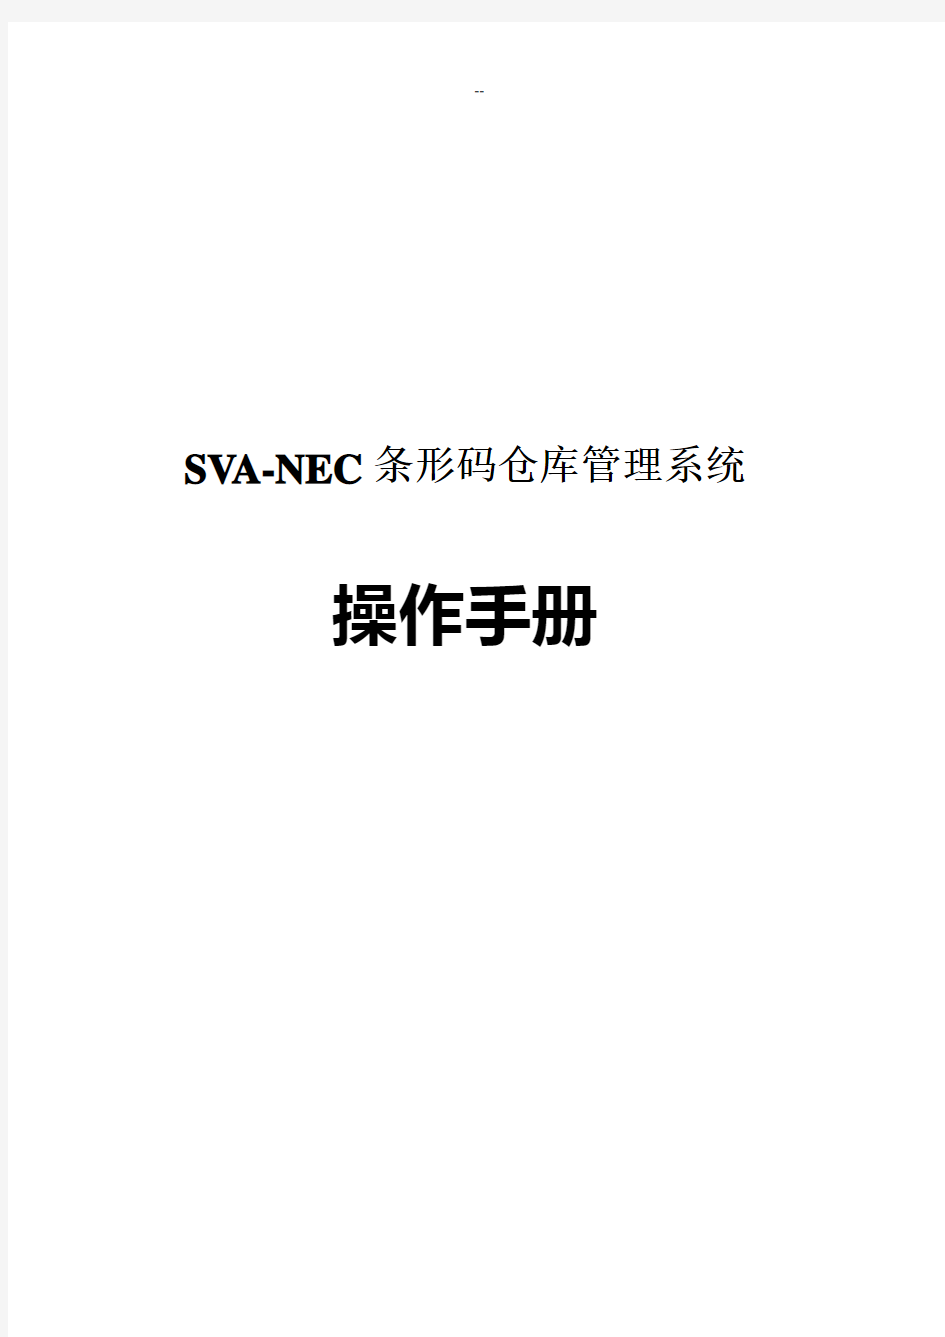 SVANEC条形码仓库管理系统操作手册